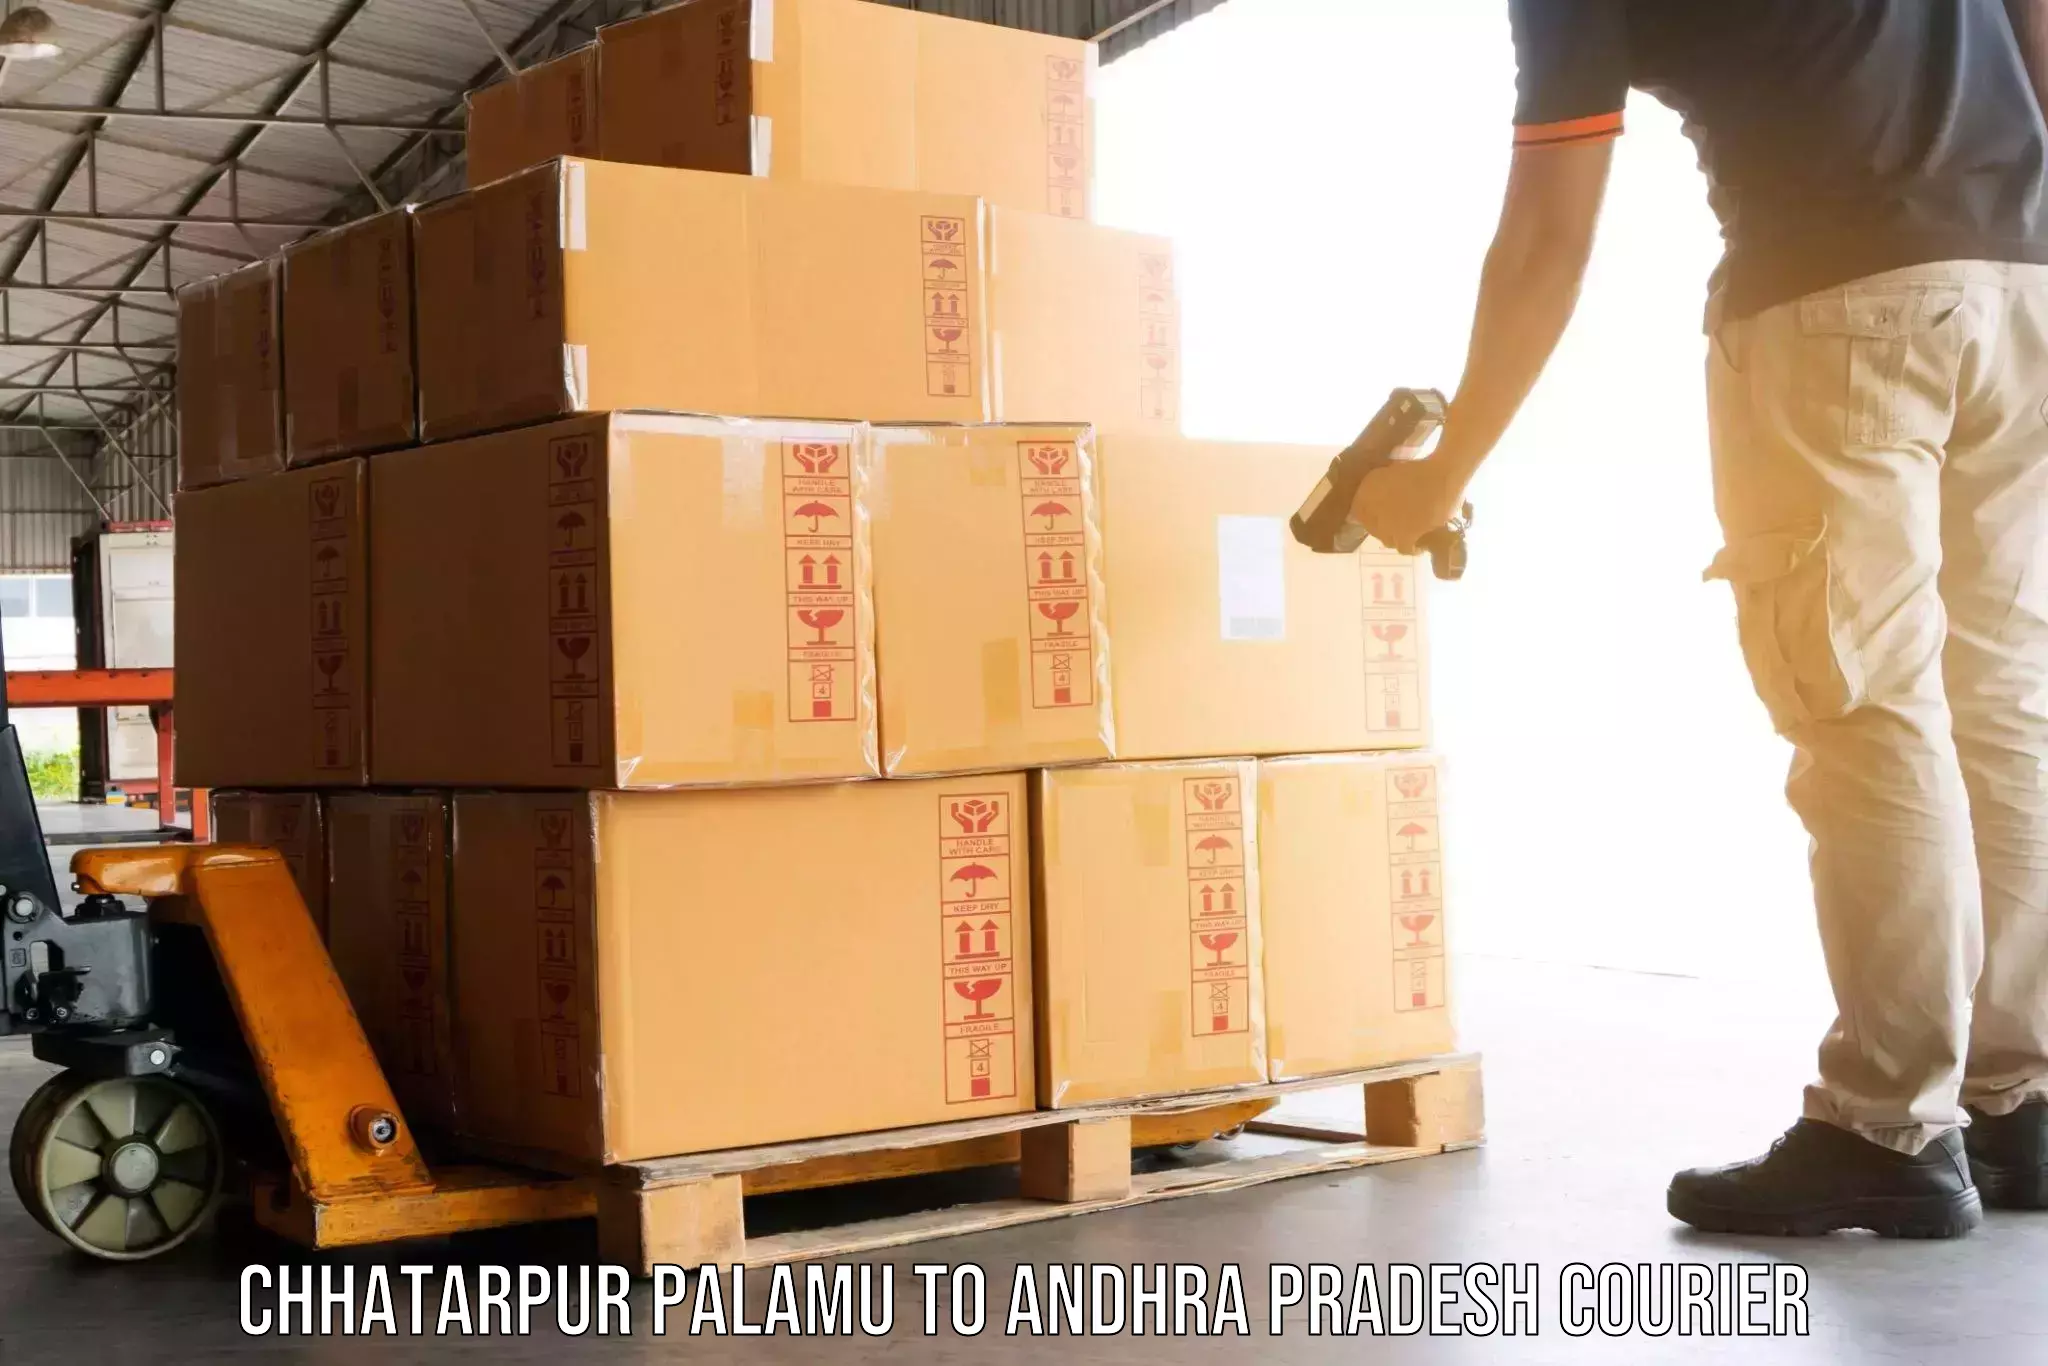 Quality moving and storage in Chhatarpur Palamu to IIT Tirupati